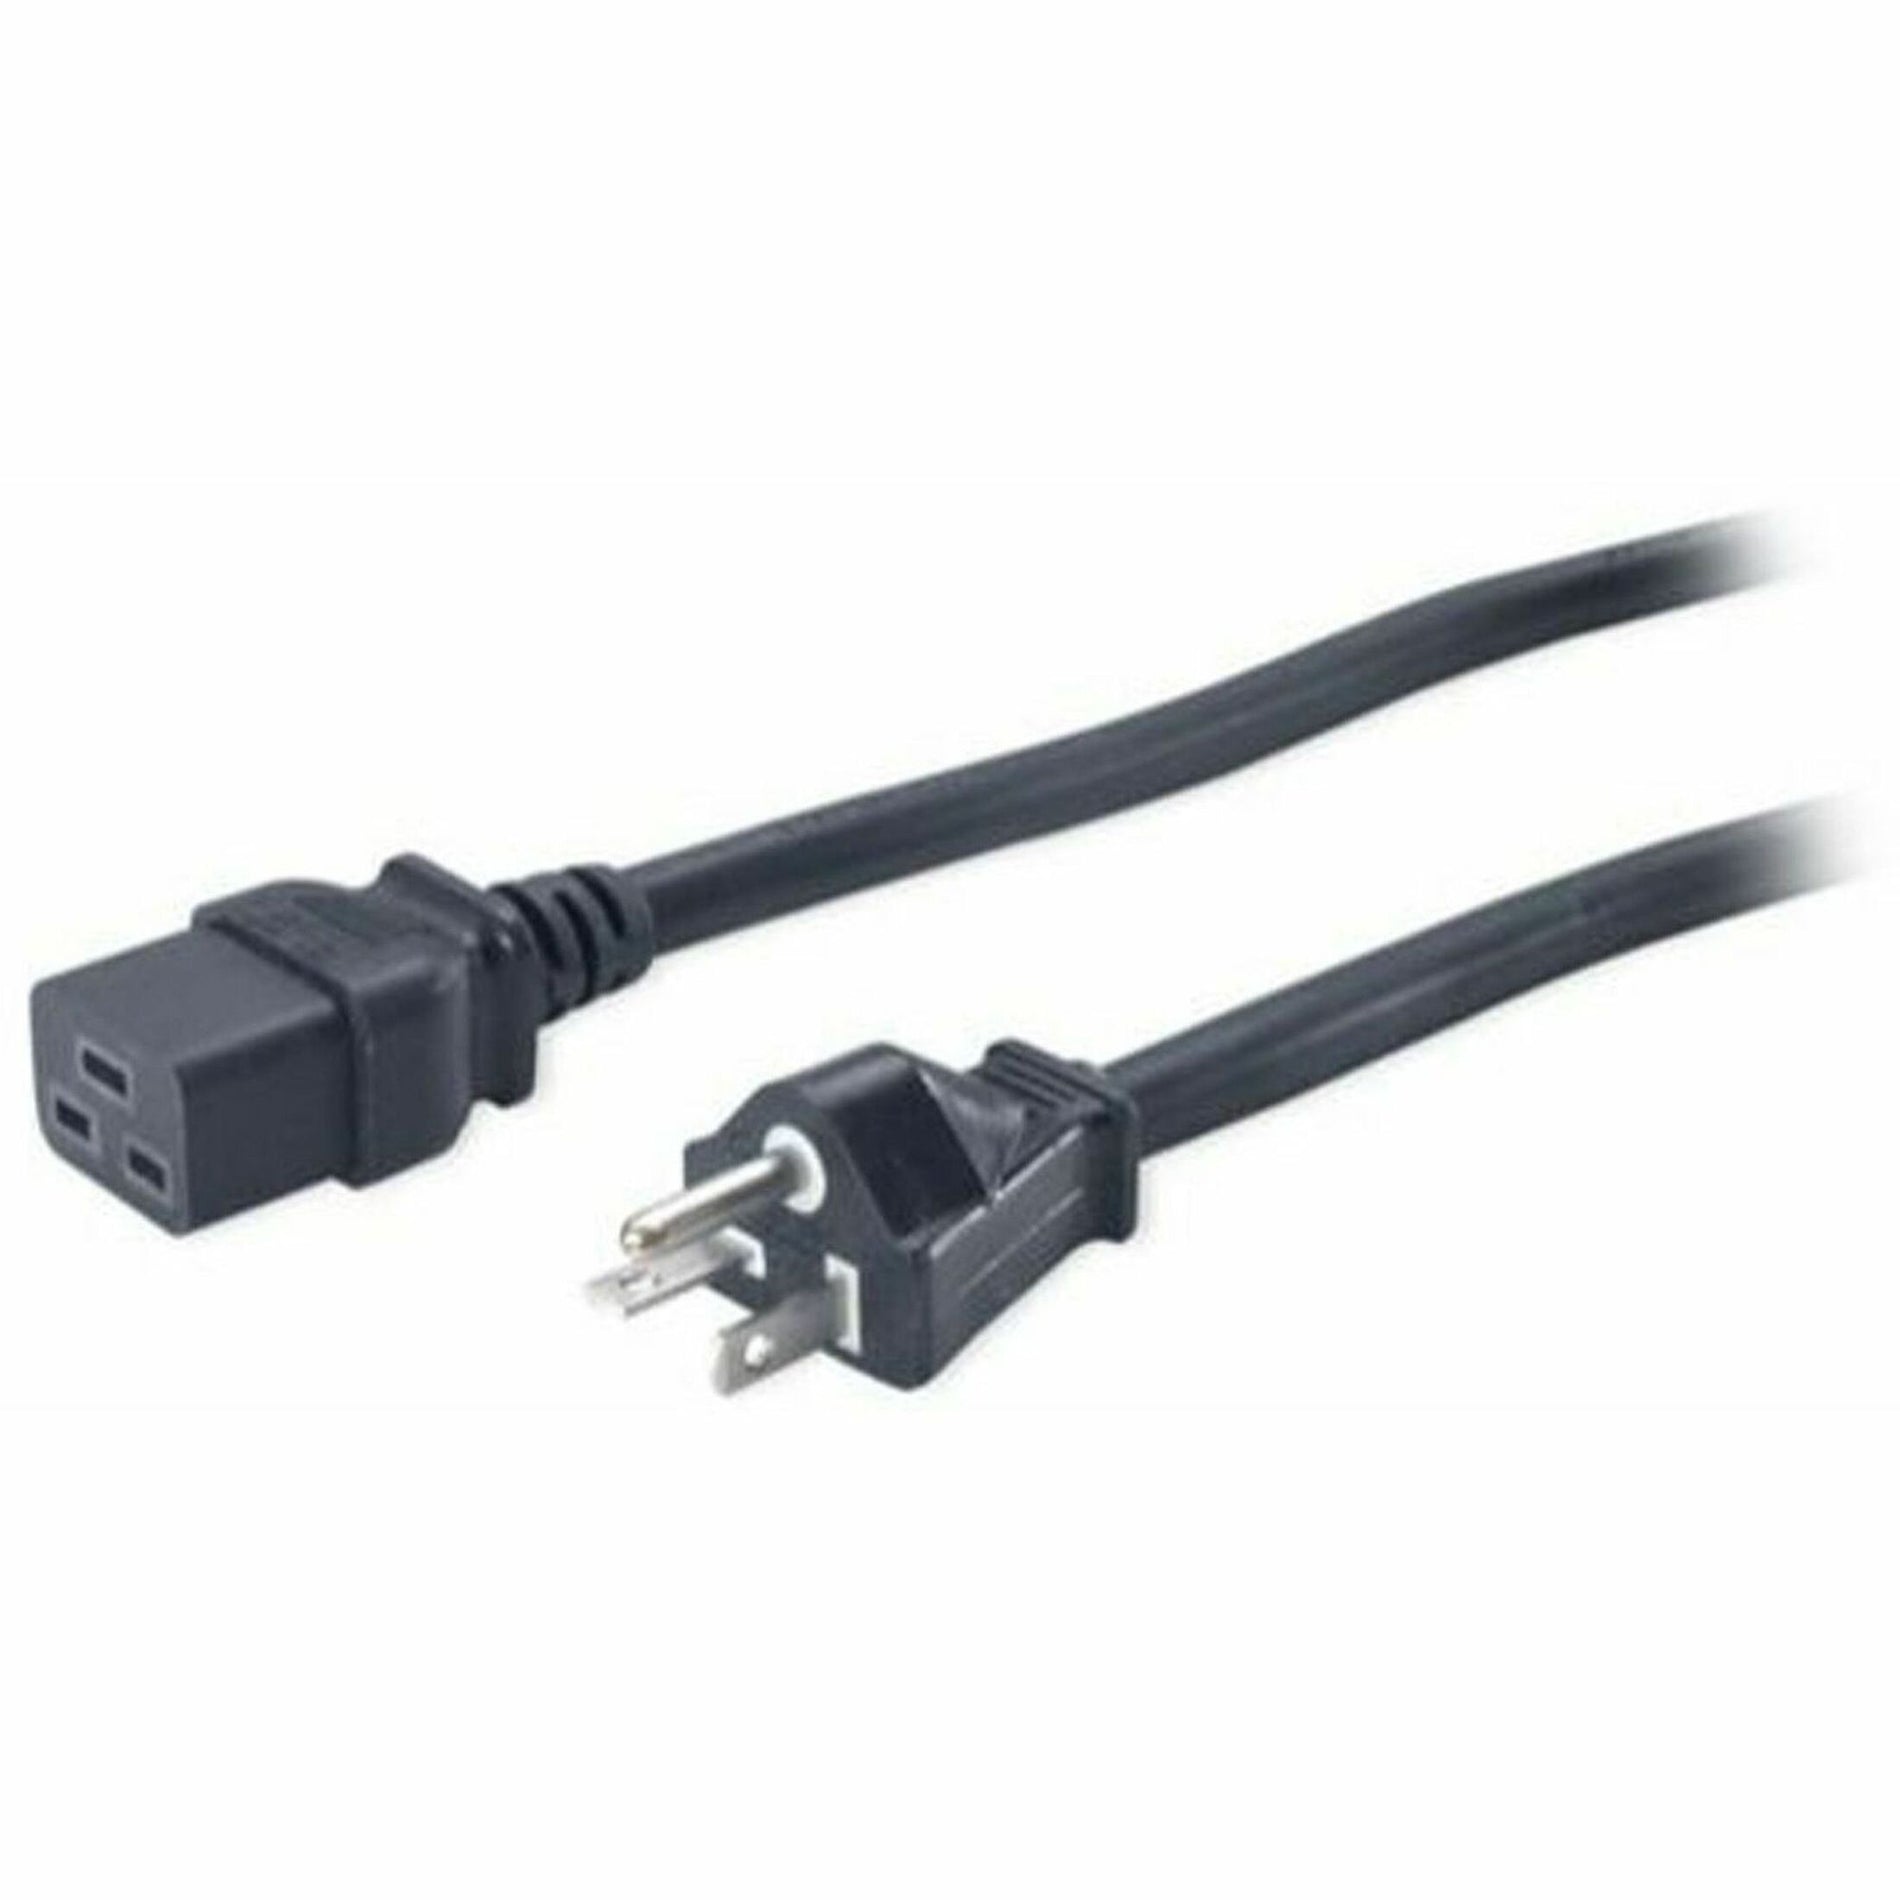 APC AP9873 Standard Power Cord, 20A, 100-120V, C19 to 5-20, 2 Year Warranty